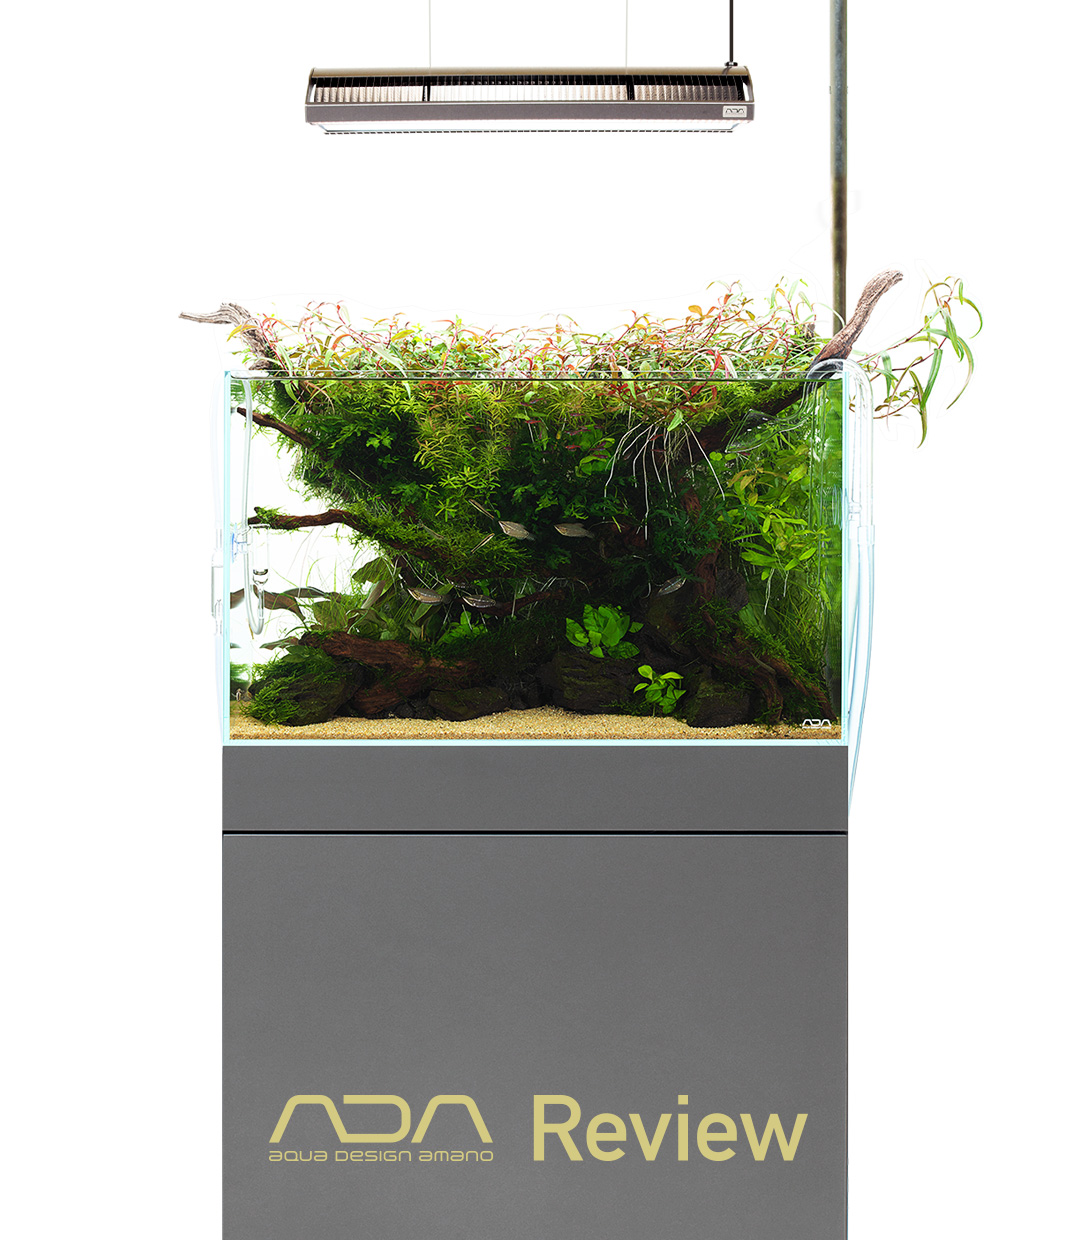 ADA Review 「一歩進んだ60㎝水槽システム」 | AQUA DESIGN AMANO